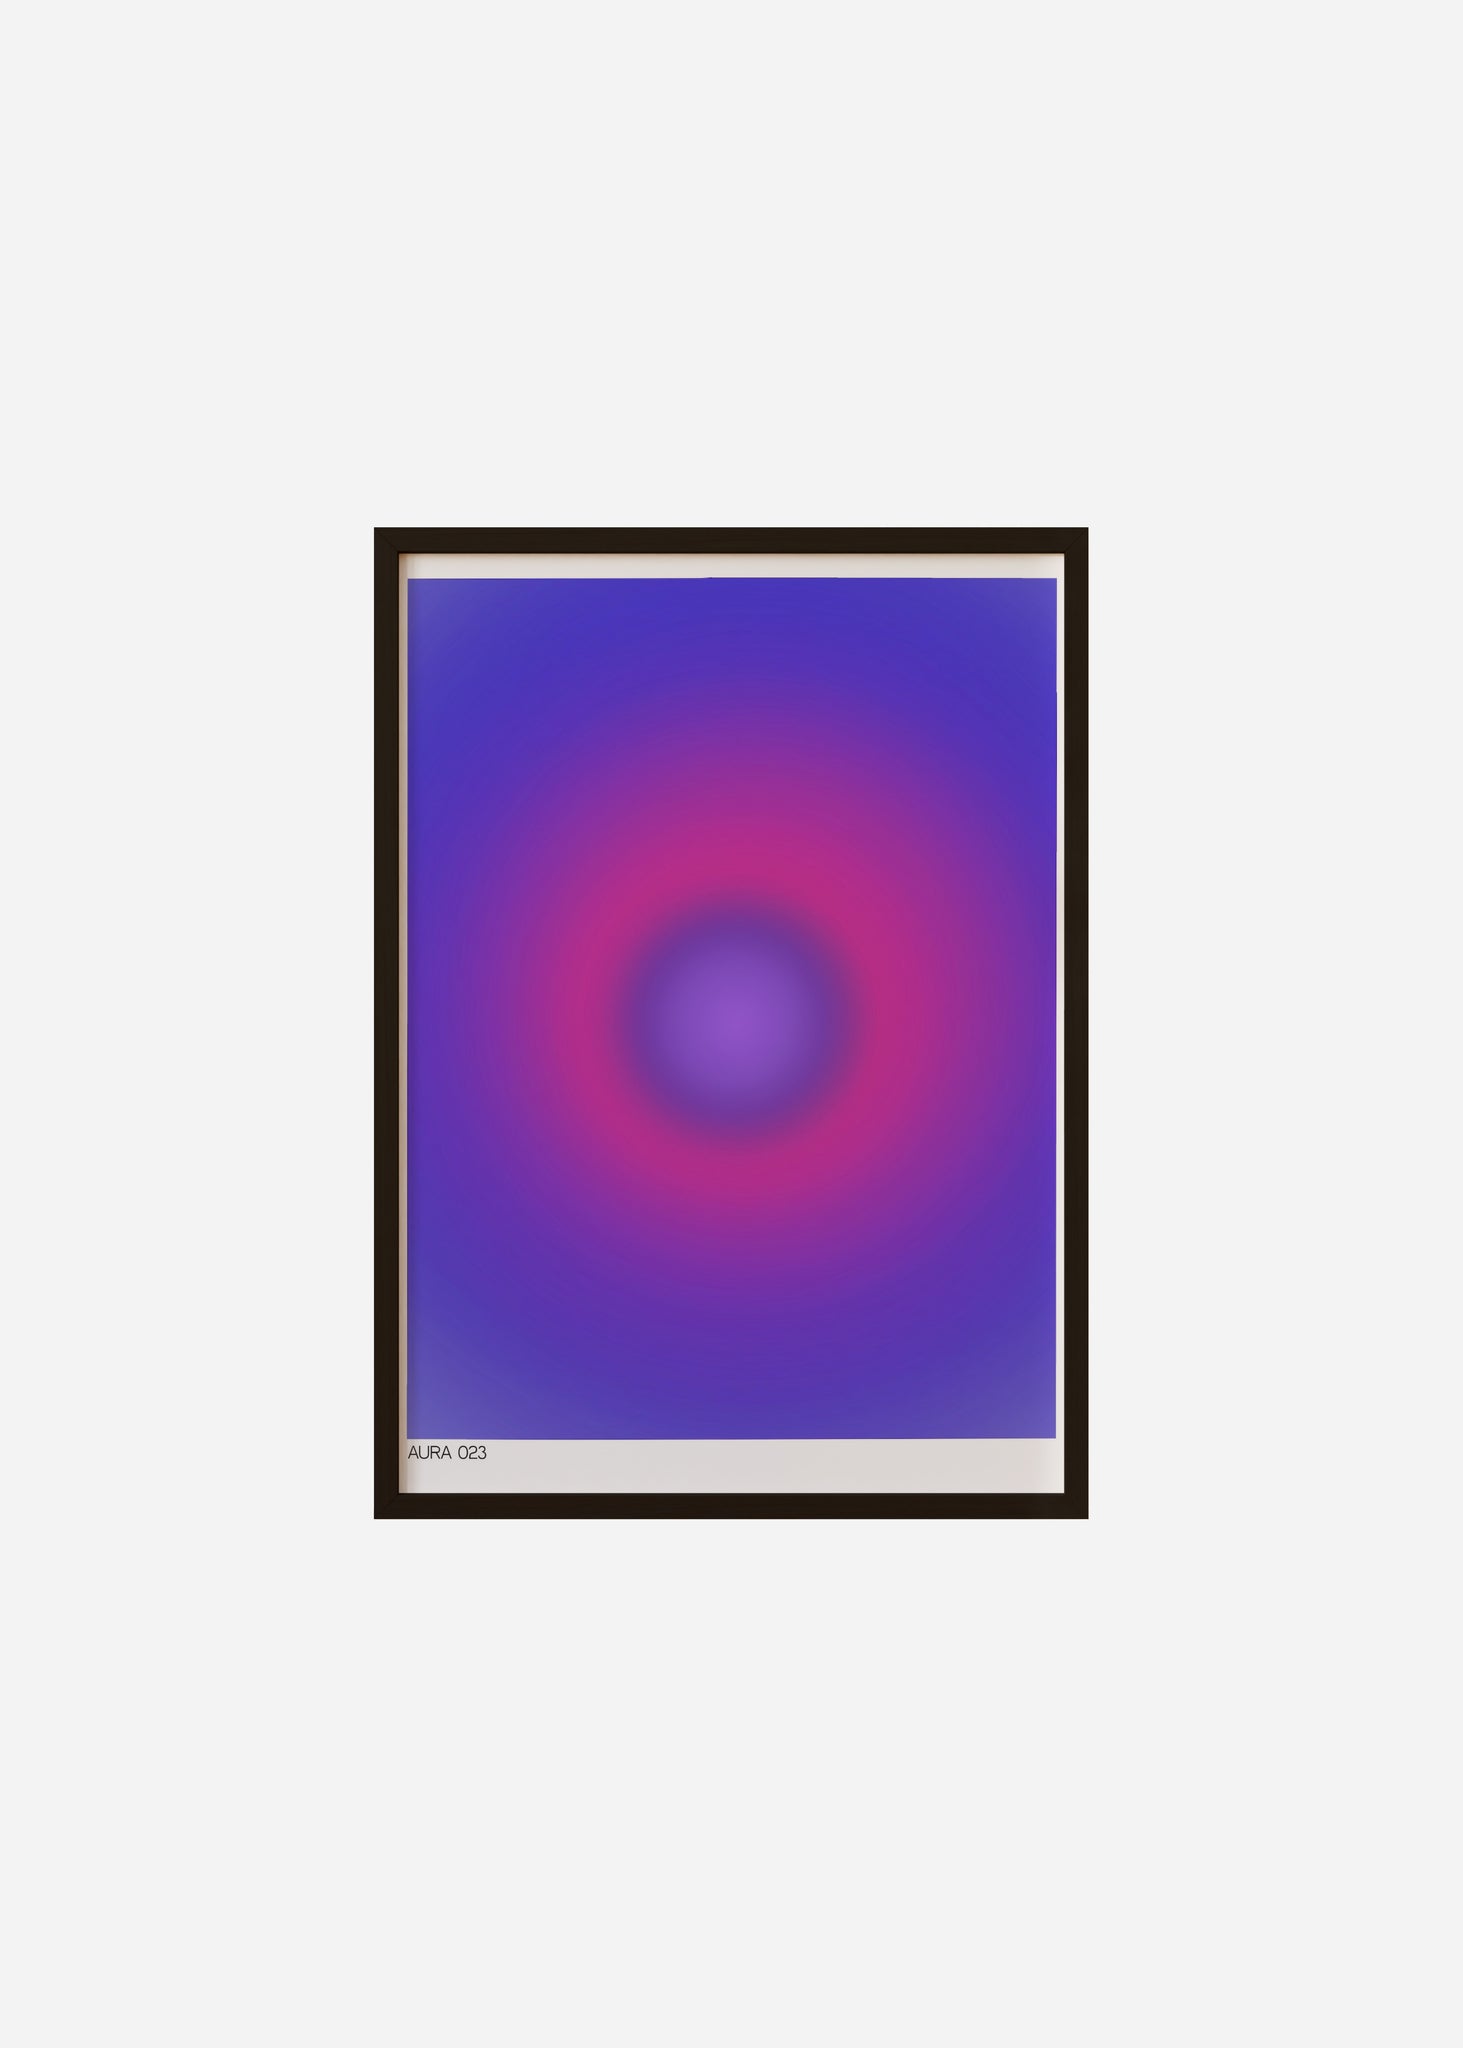 aura 023 Framed Print